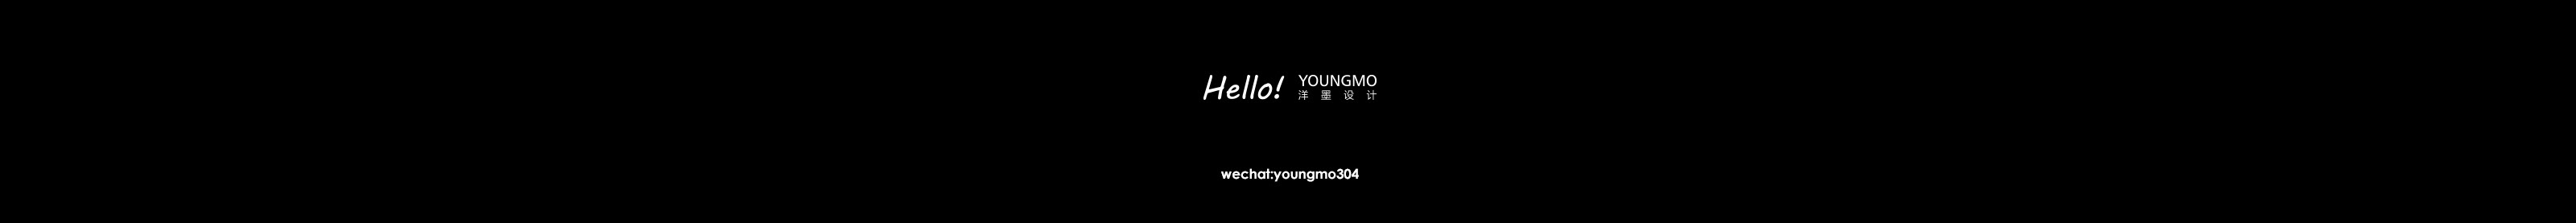 Profil-Banner von young mo